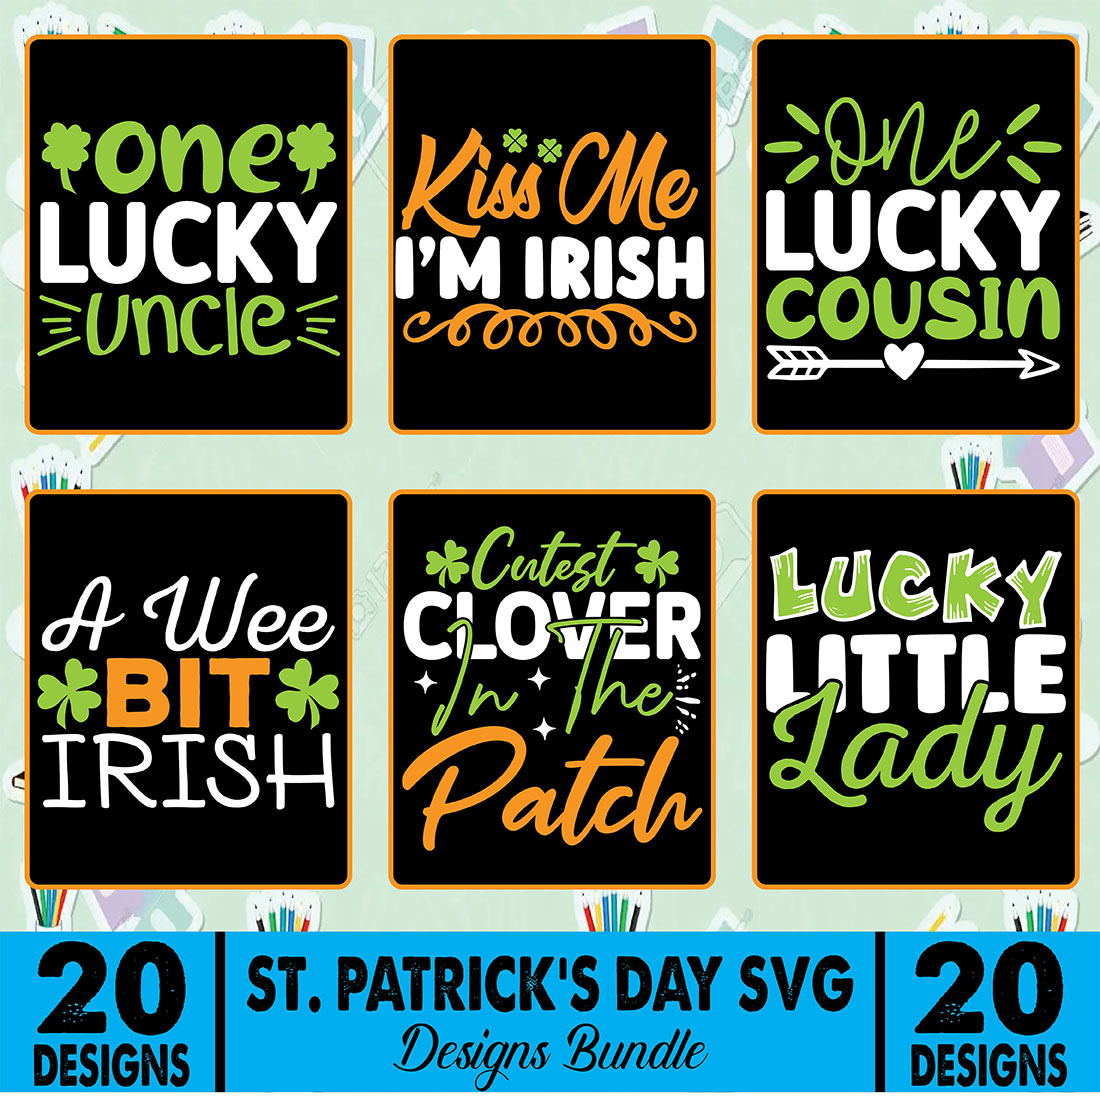 St.Patrick's Day Svg Designs Bundle cover image.